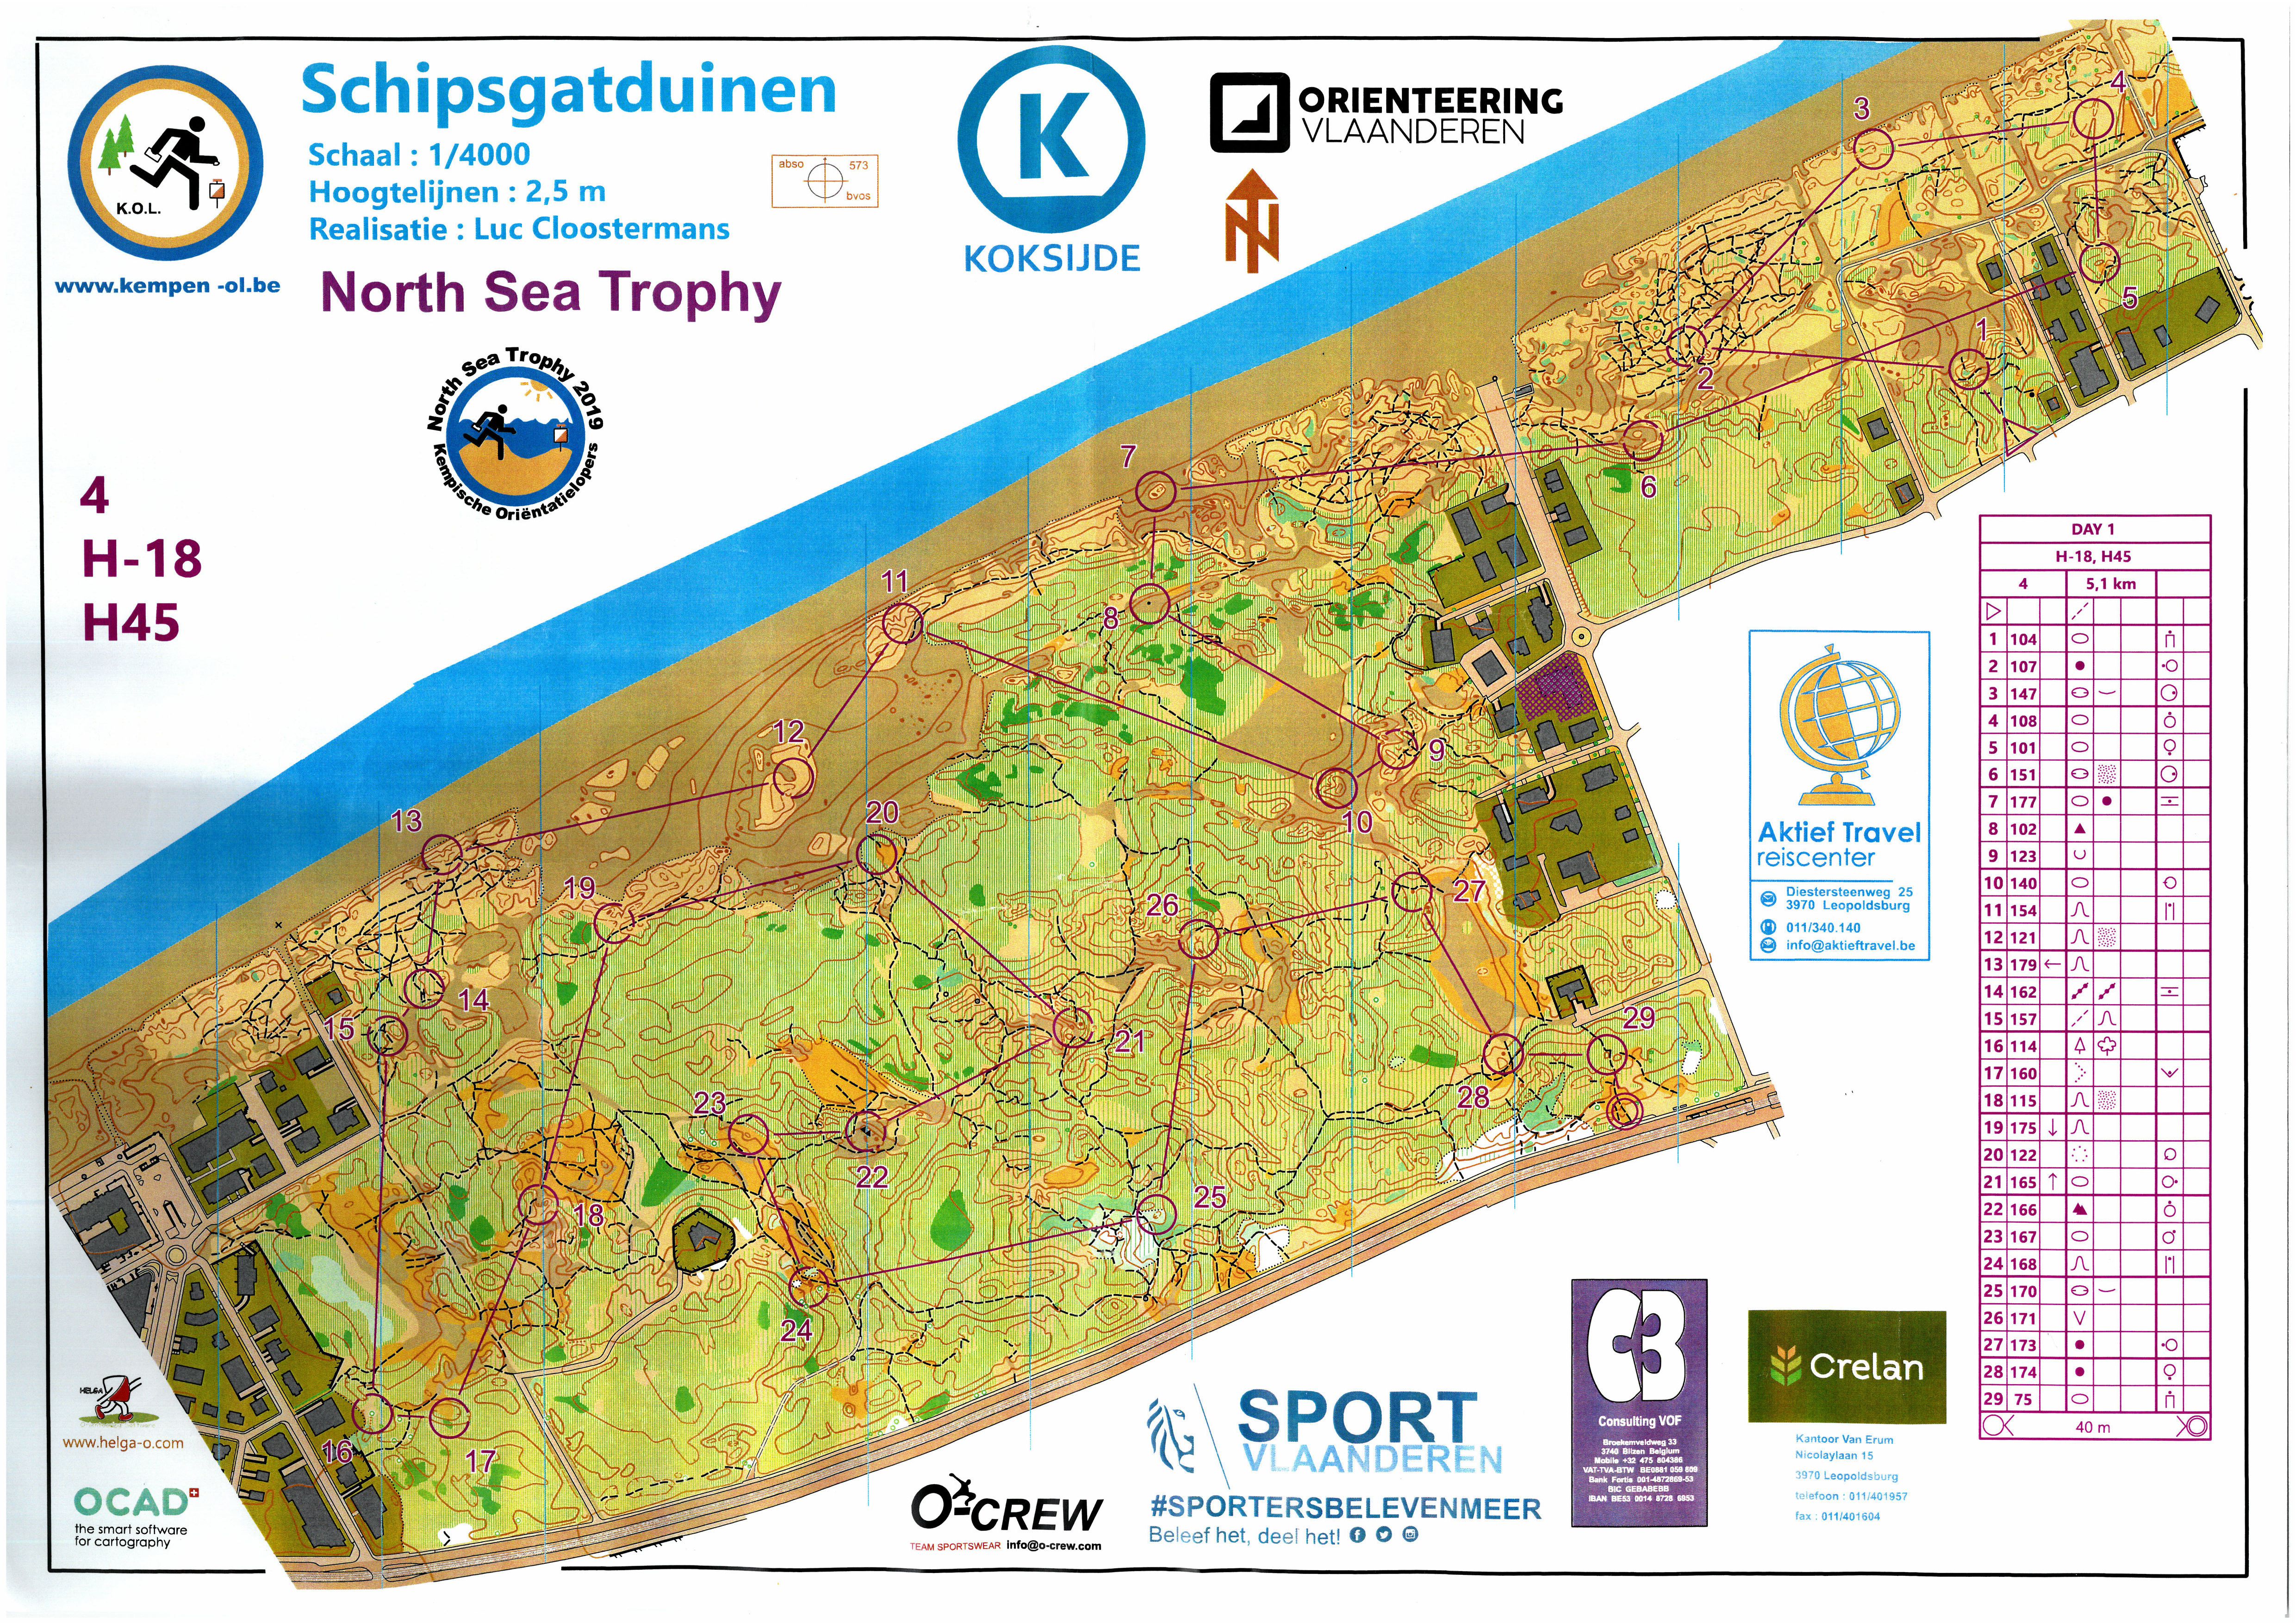 North Sea Trophy - Day1 - H45 (09/11/2019)